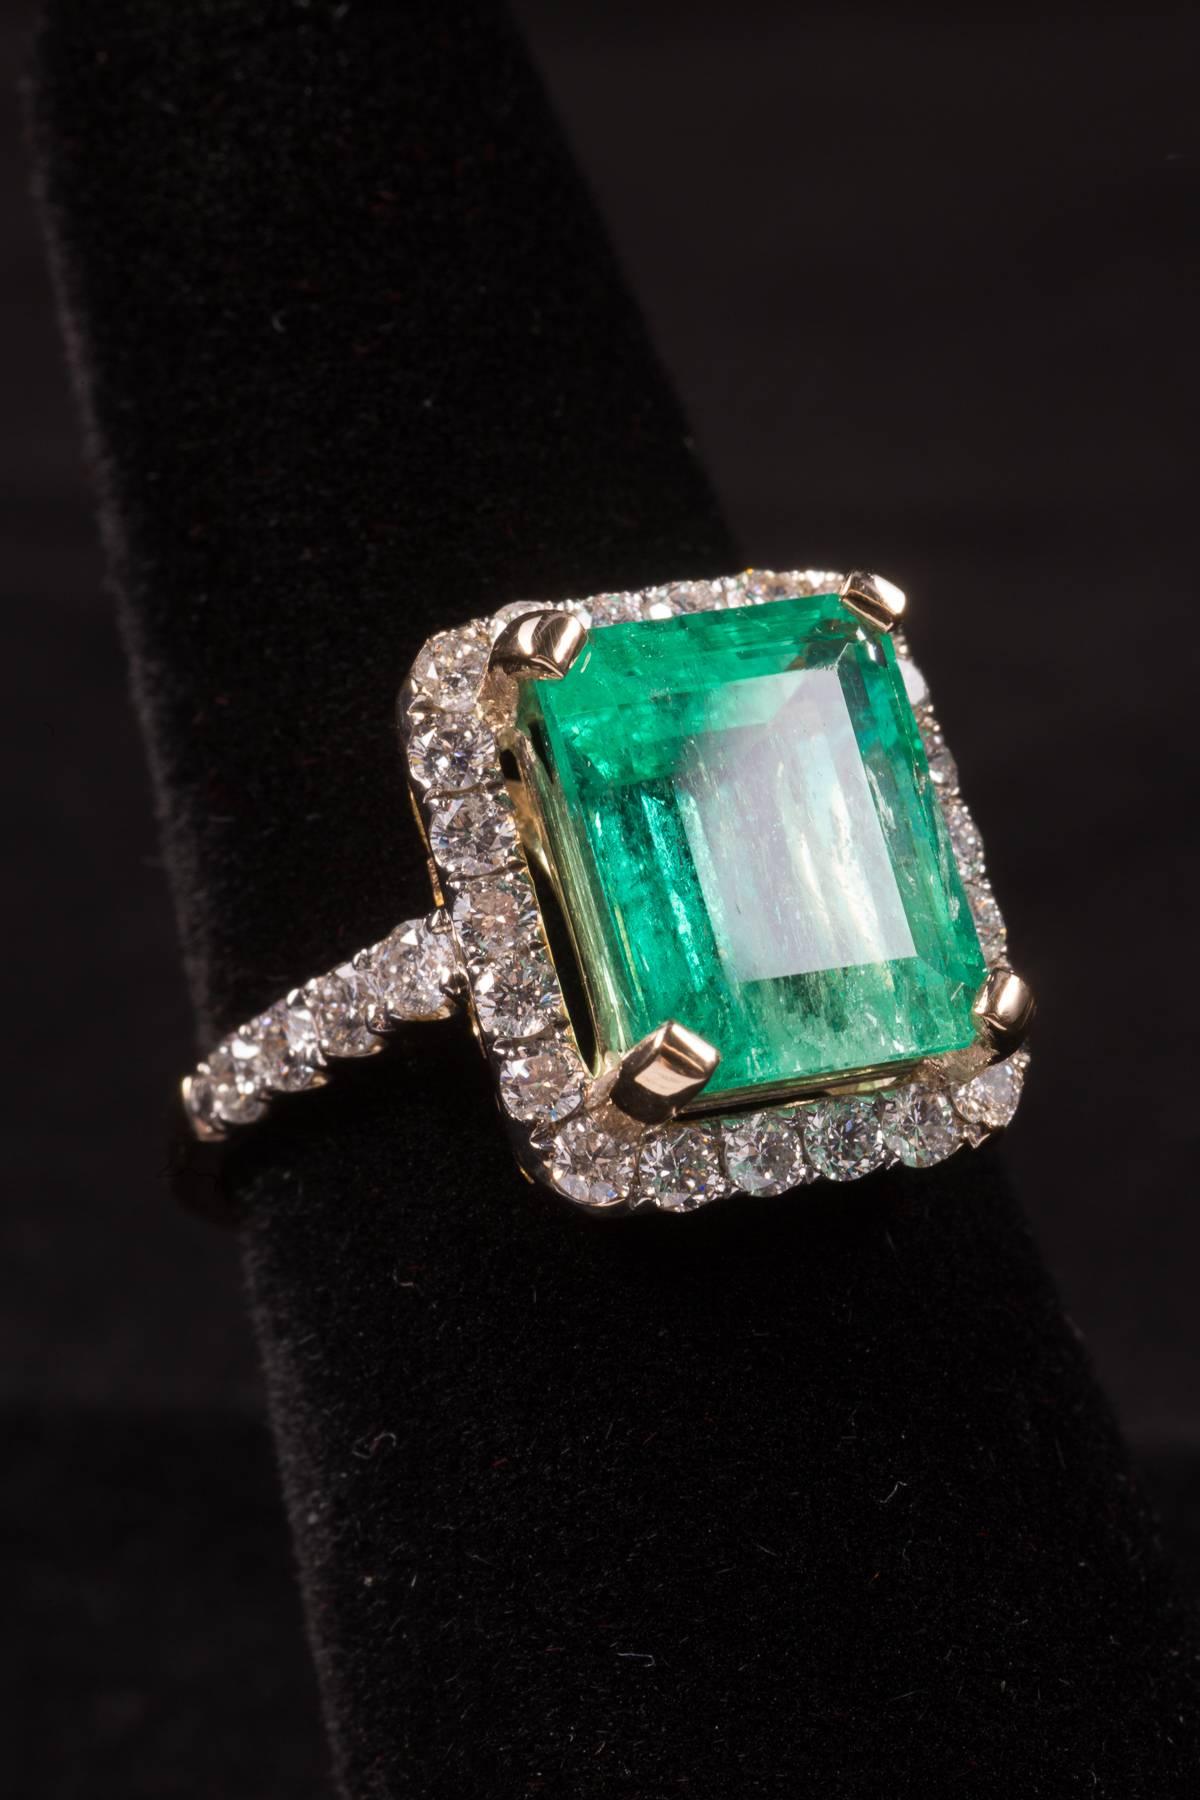 Art Deco 5.12 Columbian Emerald Ring with 1 carat of Full Cut Round Diamonds.
Size 7